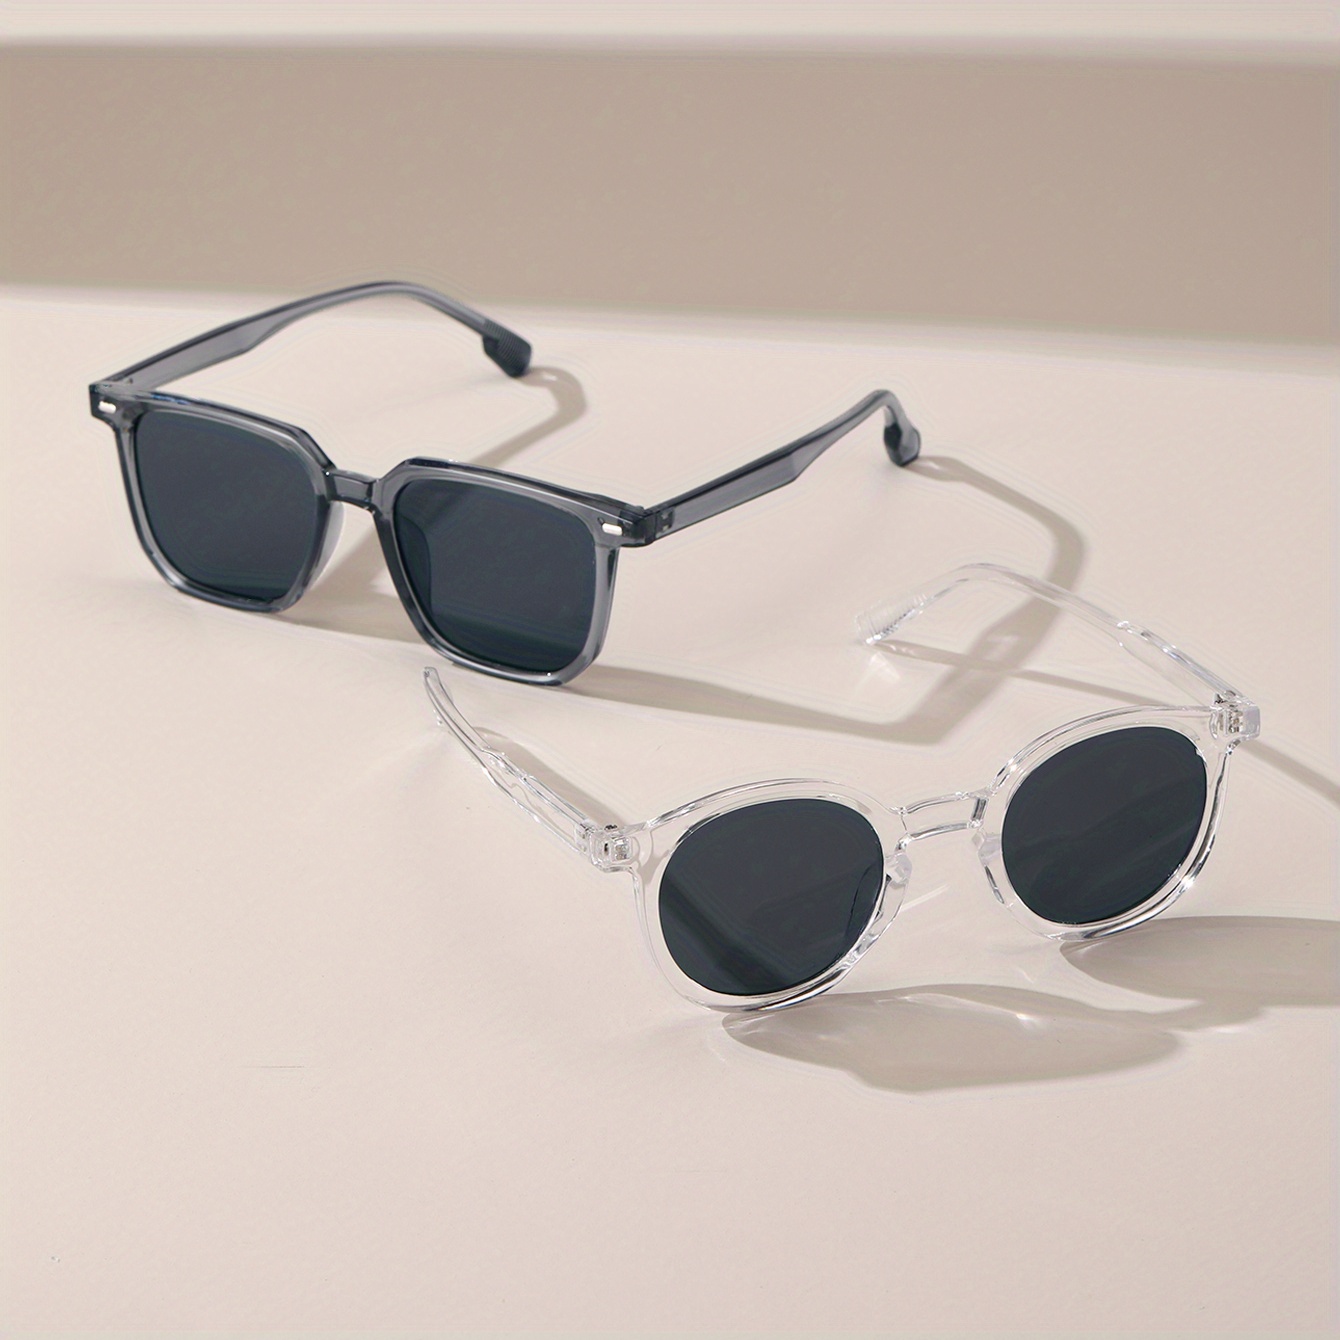 2 Pairs Men's Black Versatile Classic Sunglasses Casual PC Square Frame Sunglasses With Black Glasses Case